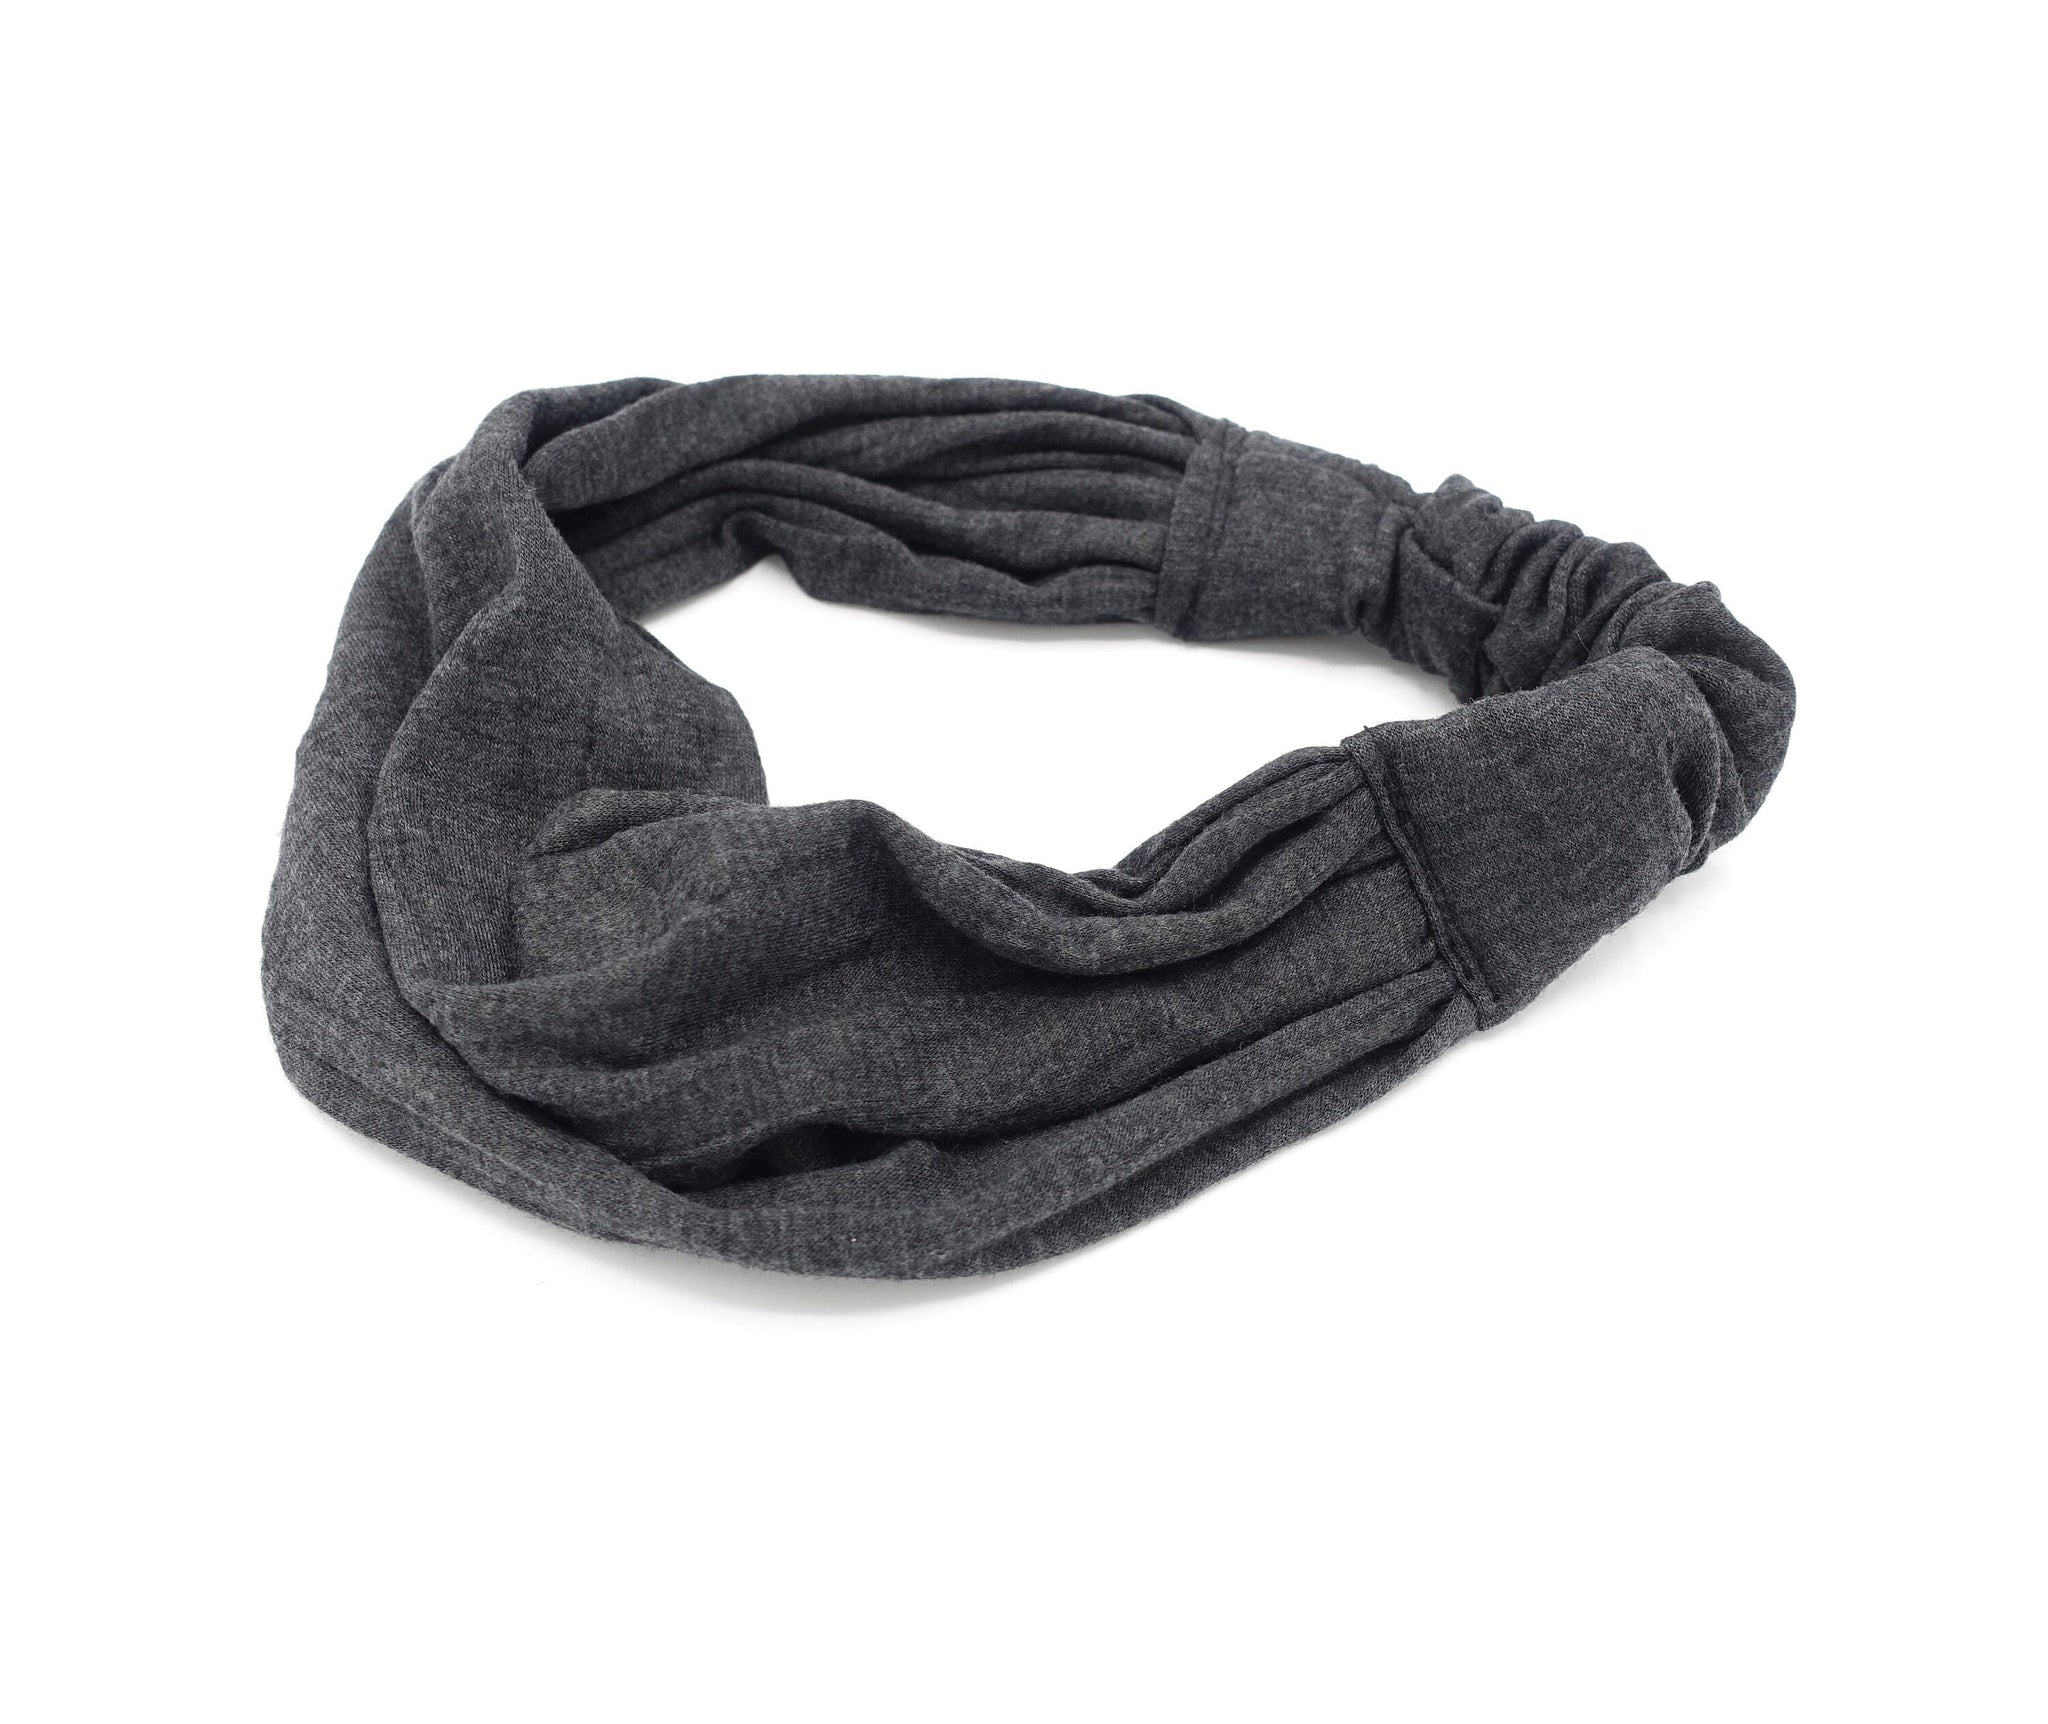 veryshine.com Headband Dark gray crinkled cotton headwrap elastic hair turban style  headband women hair accessory